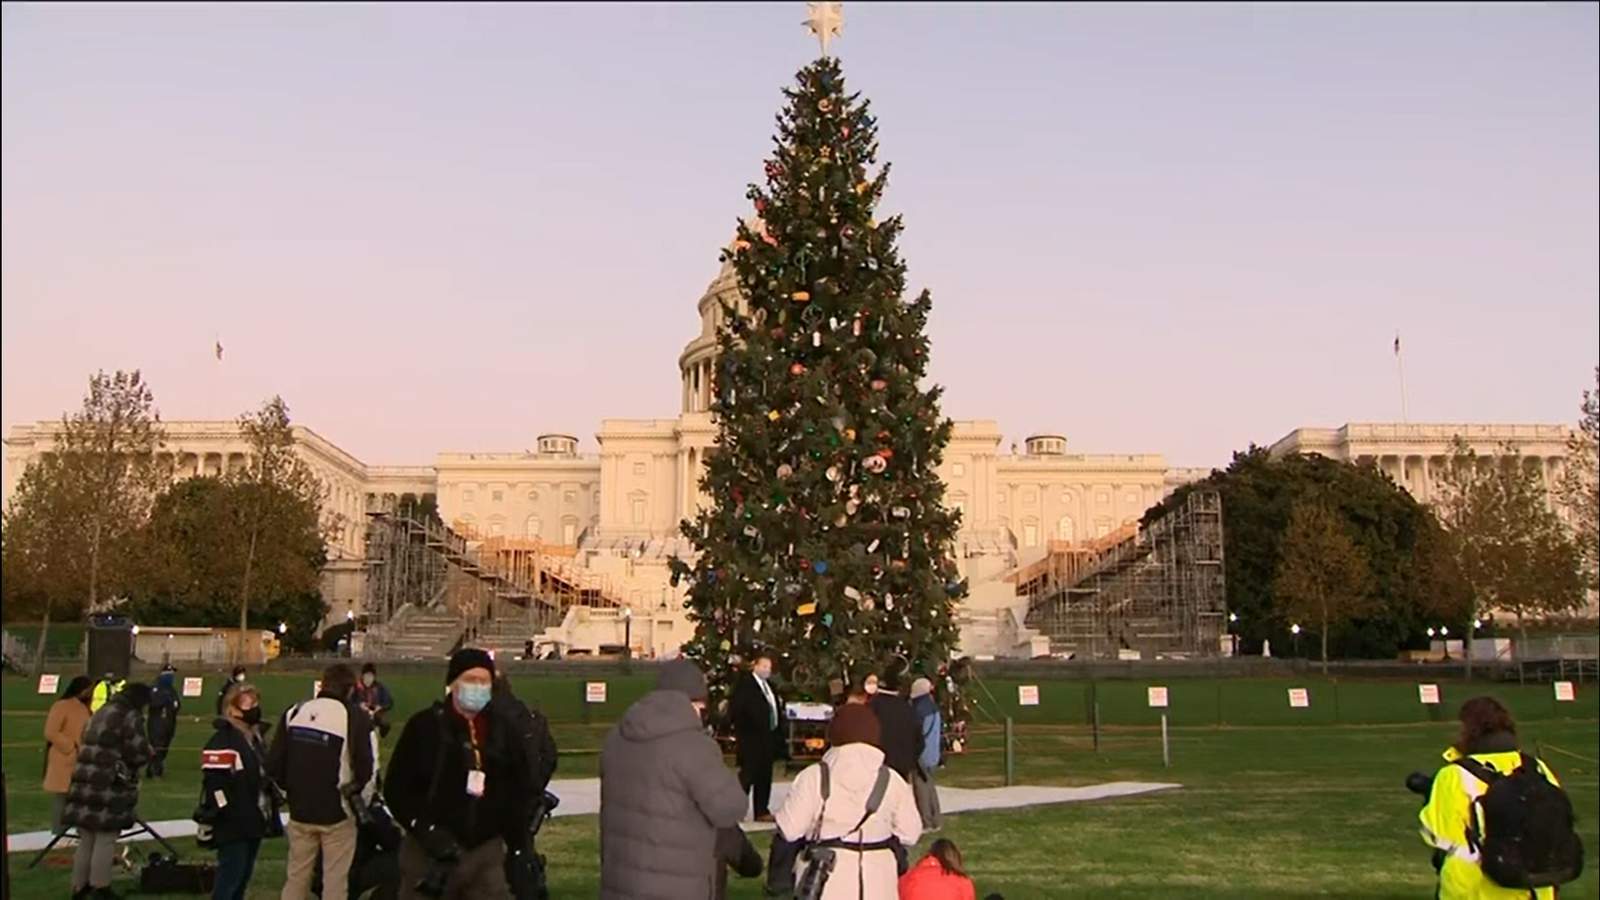 WATCH: US Capitol Christmas tree lighting ceremony